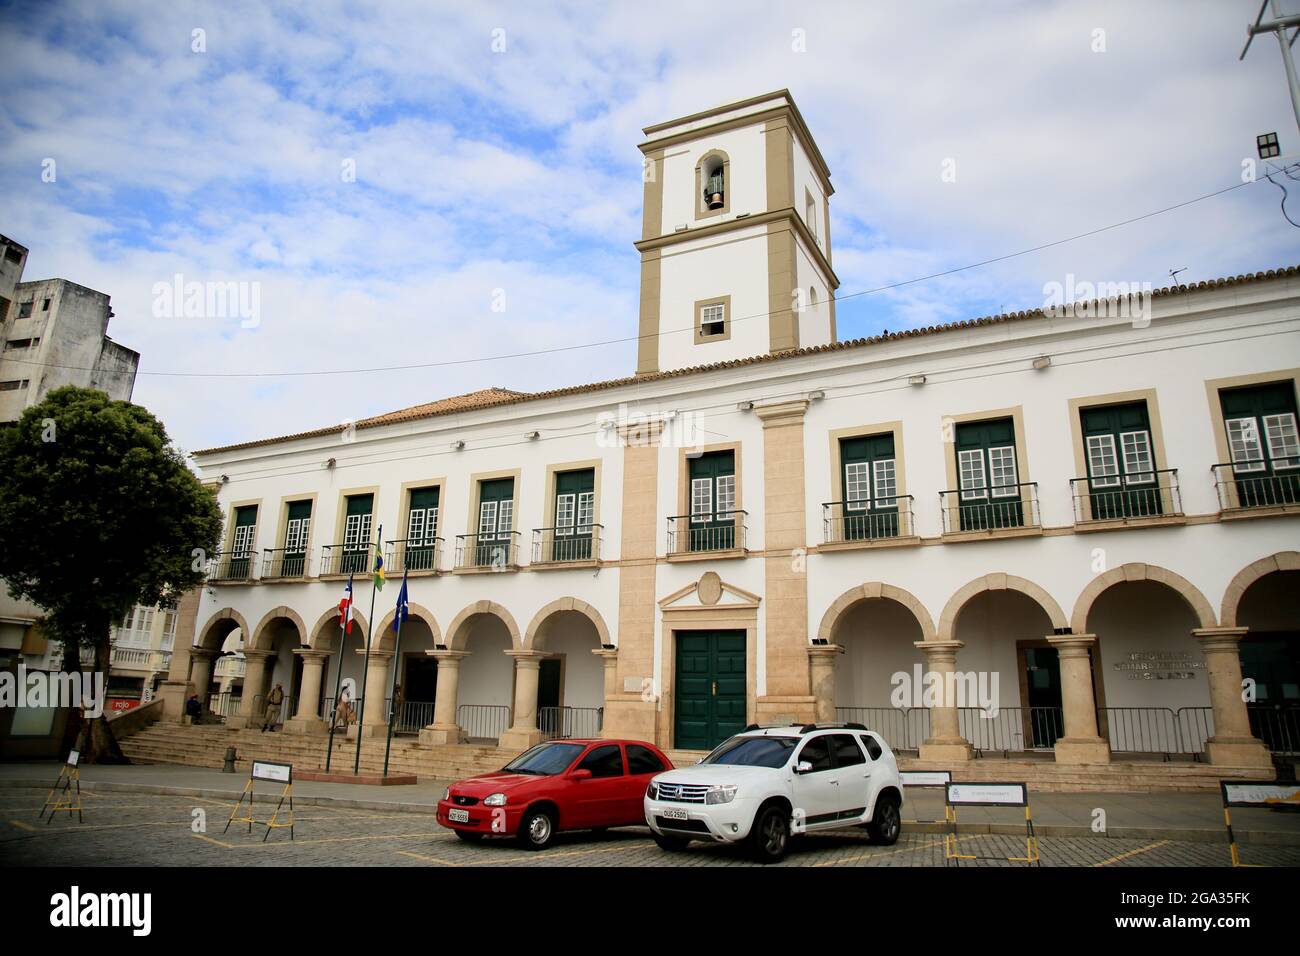 salvador, bahia, brasilien - 27. juli 2021: Blick auf die Santa Casa da Misericordia da Bahia im historischen Zentrum der Stadt Salvador. Stockfoto